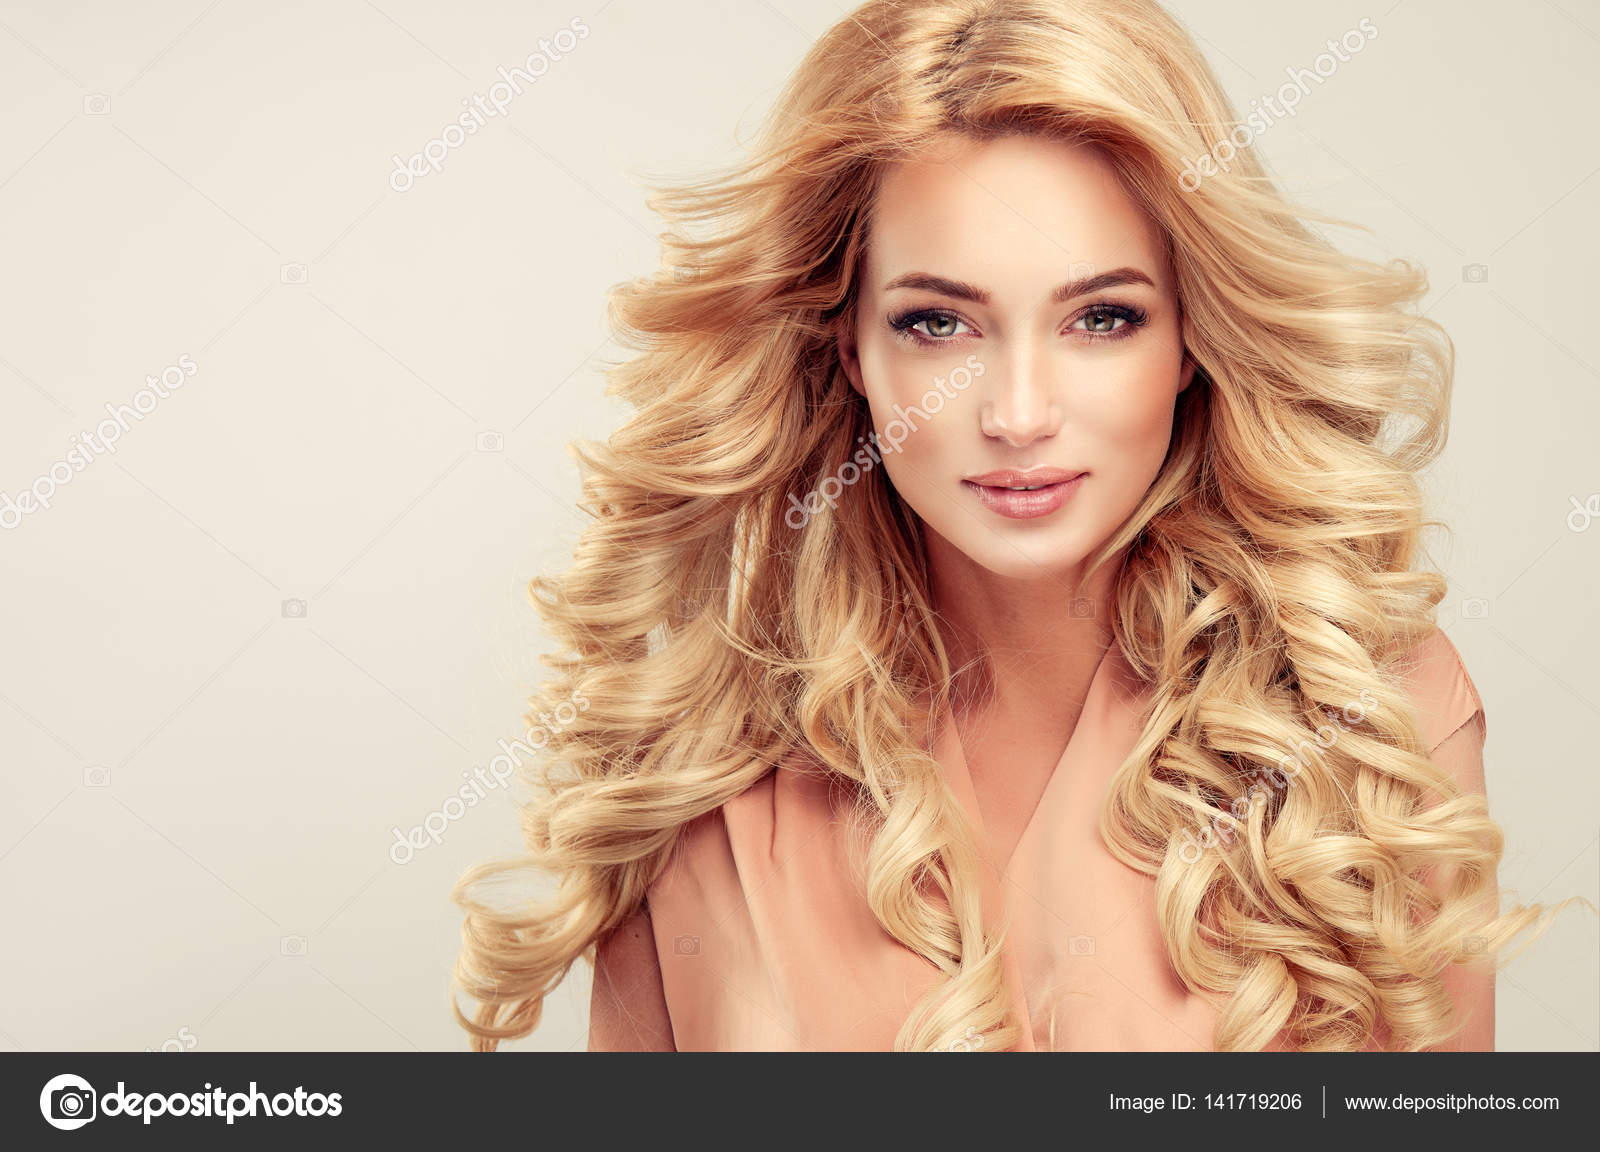 Blonde Hair - wide 2